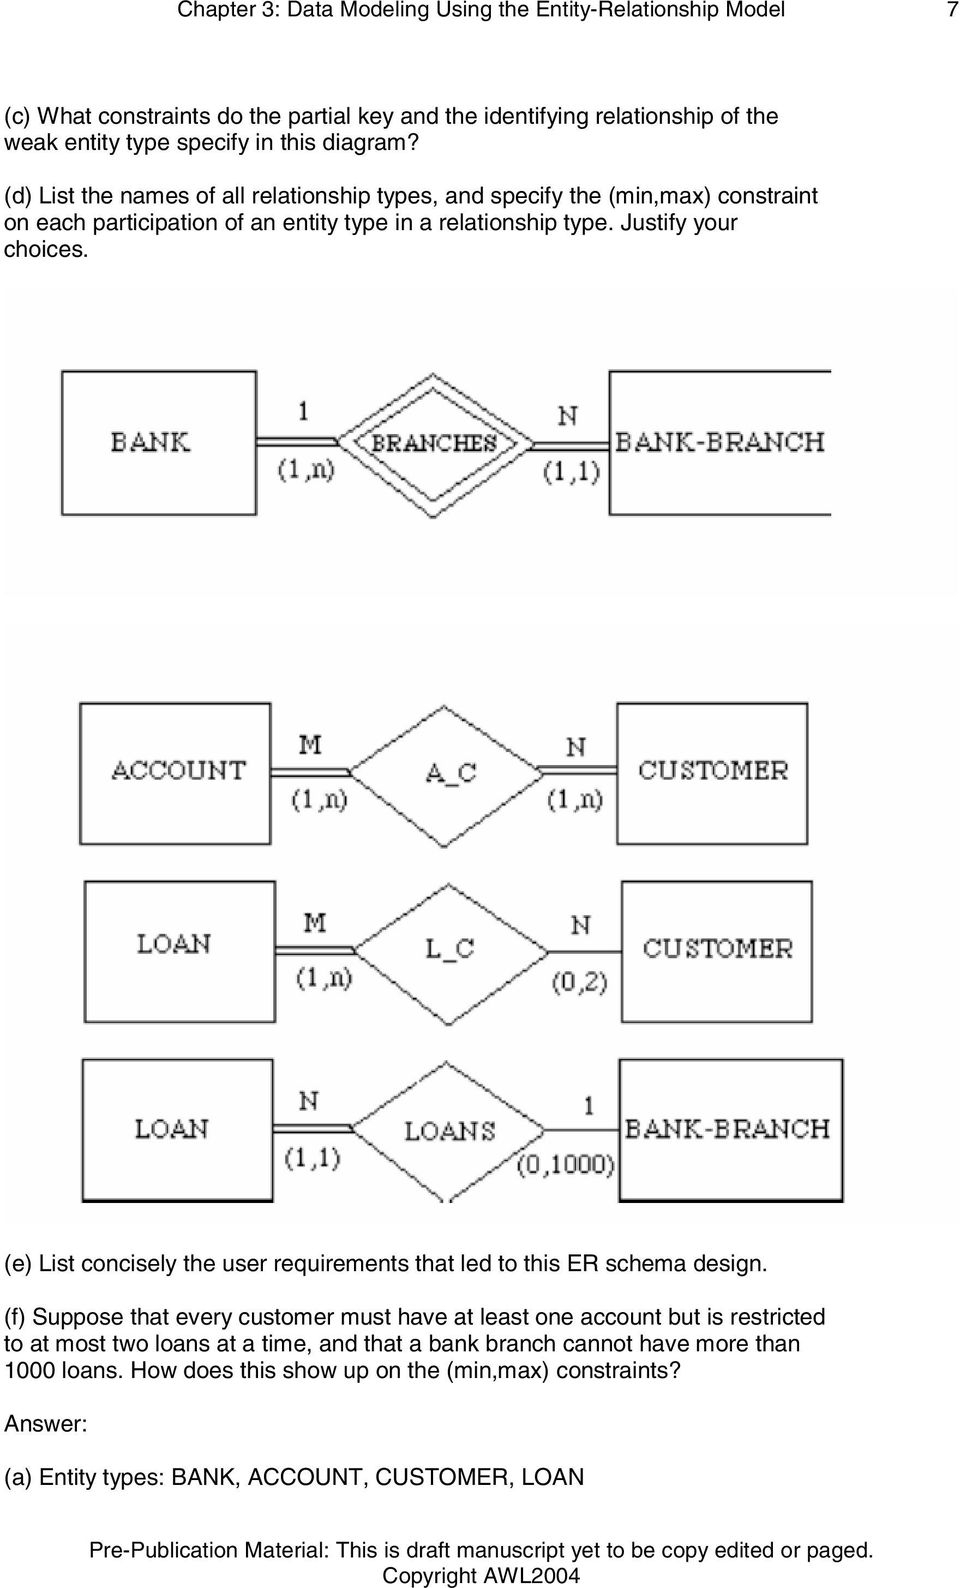 Chapter 3: Data Modeling Using The Entity-Relationship Model for Er Diagram Partial Key